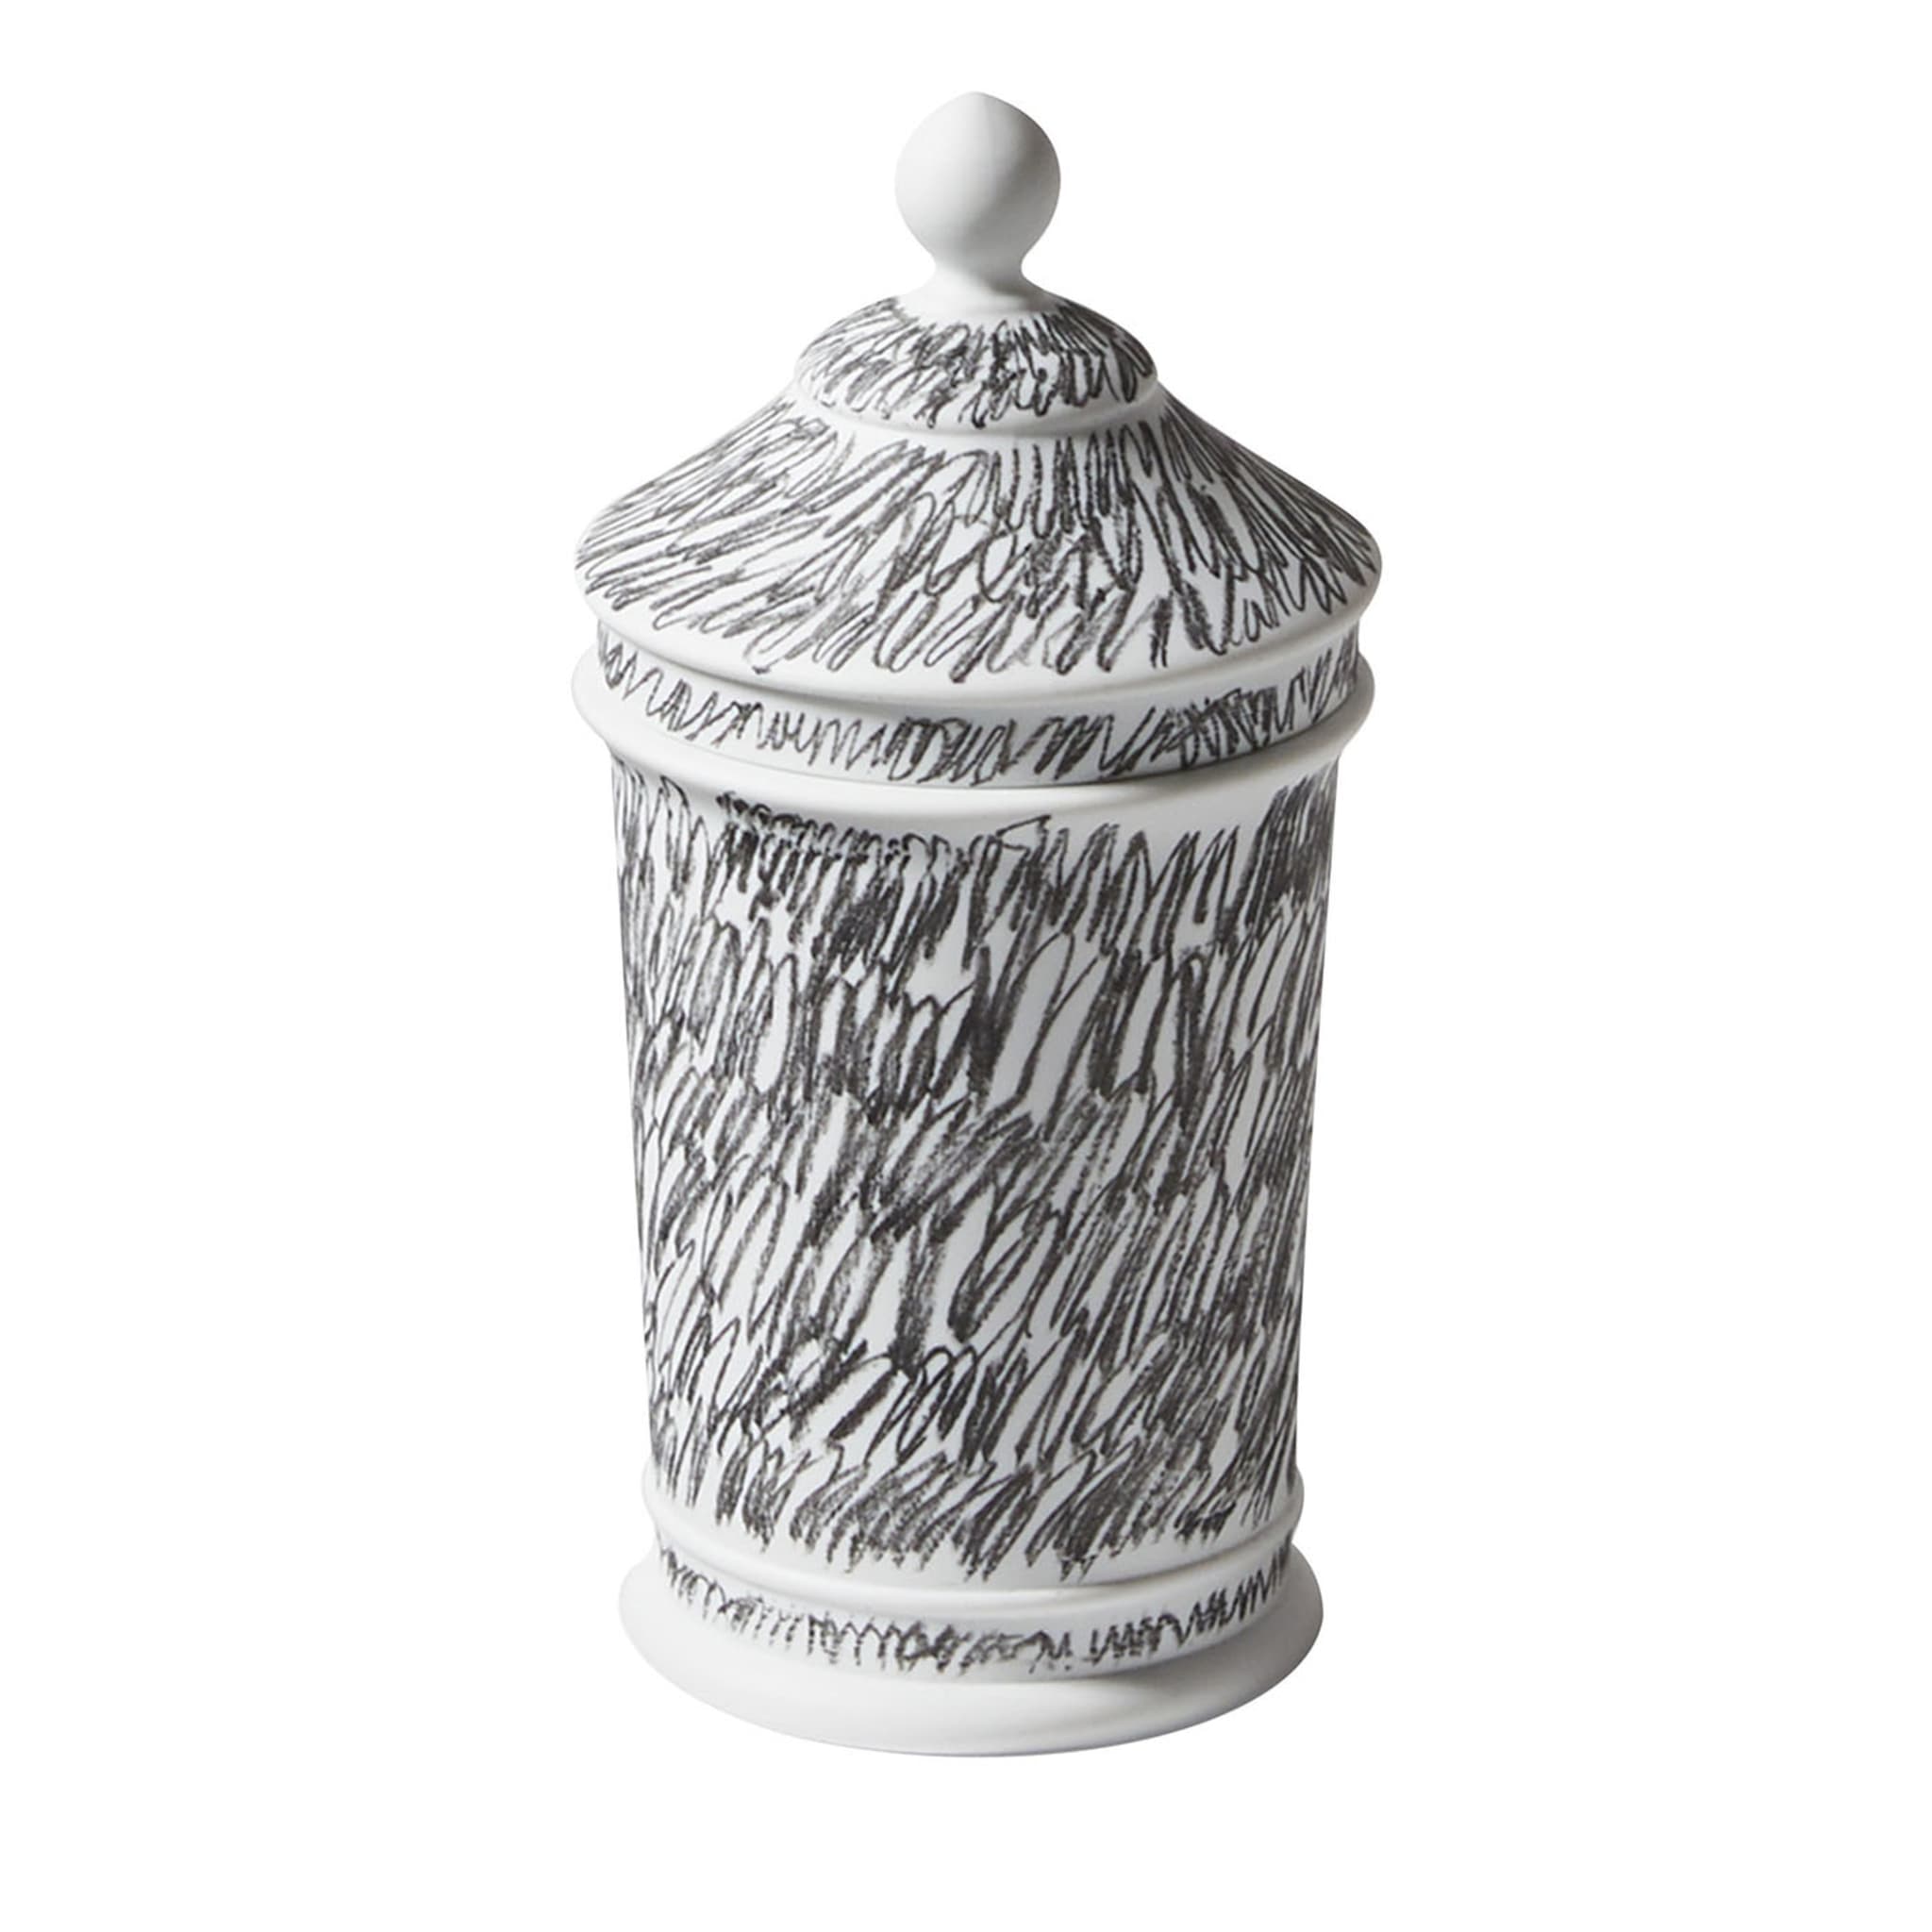 Post Scriptum Black & White Vase with Lid by Formafantasma - Main view